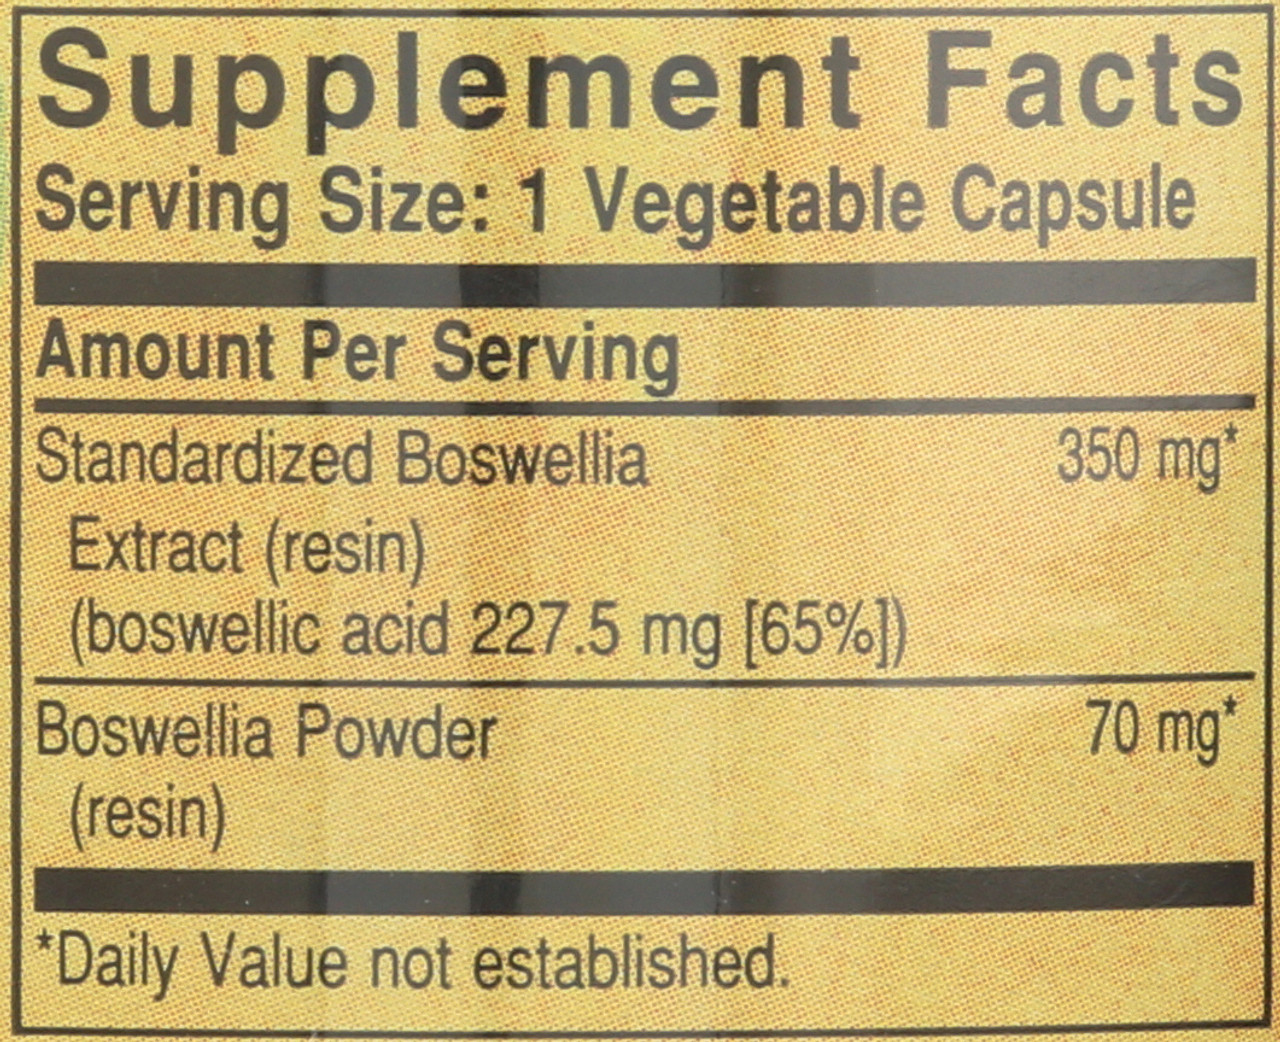 SFP Boswellia Resin Extract 60 Vegetable Capsules